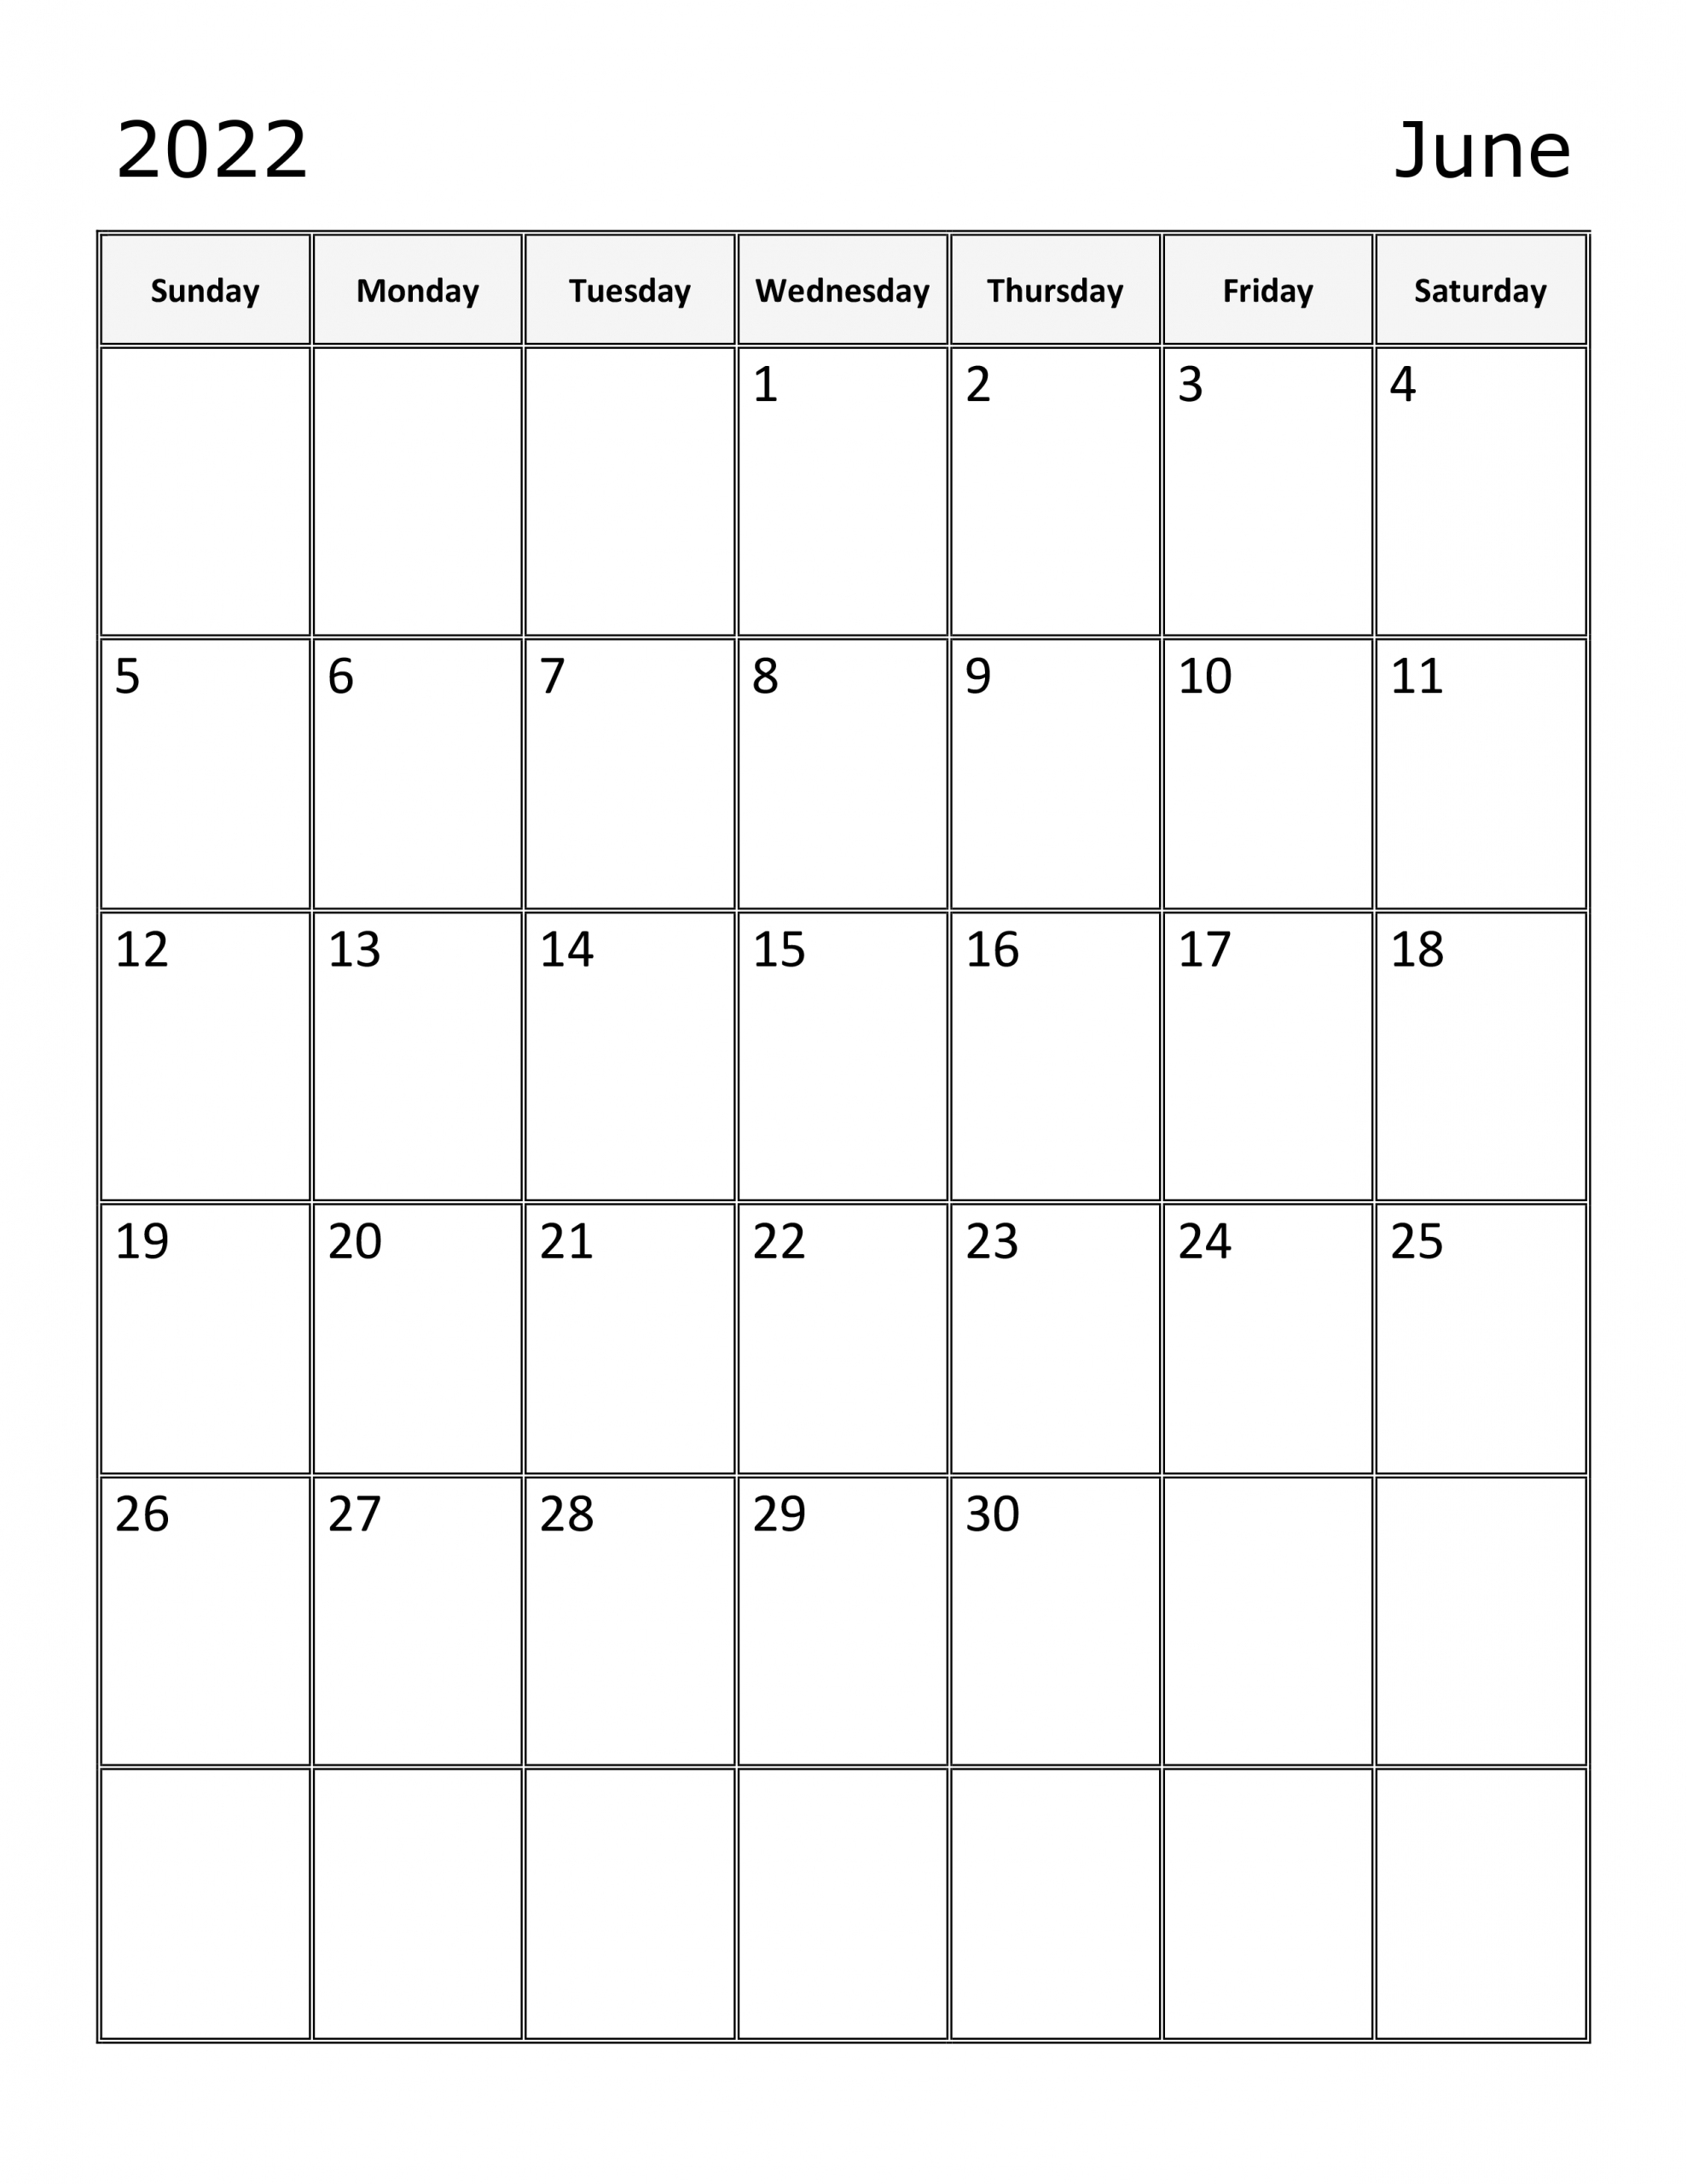 Calendar For June 2022 - Free-Calendarsu